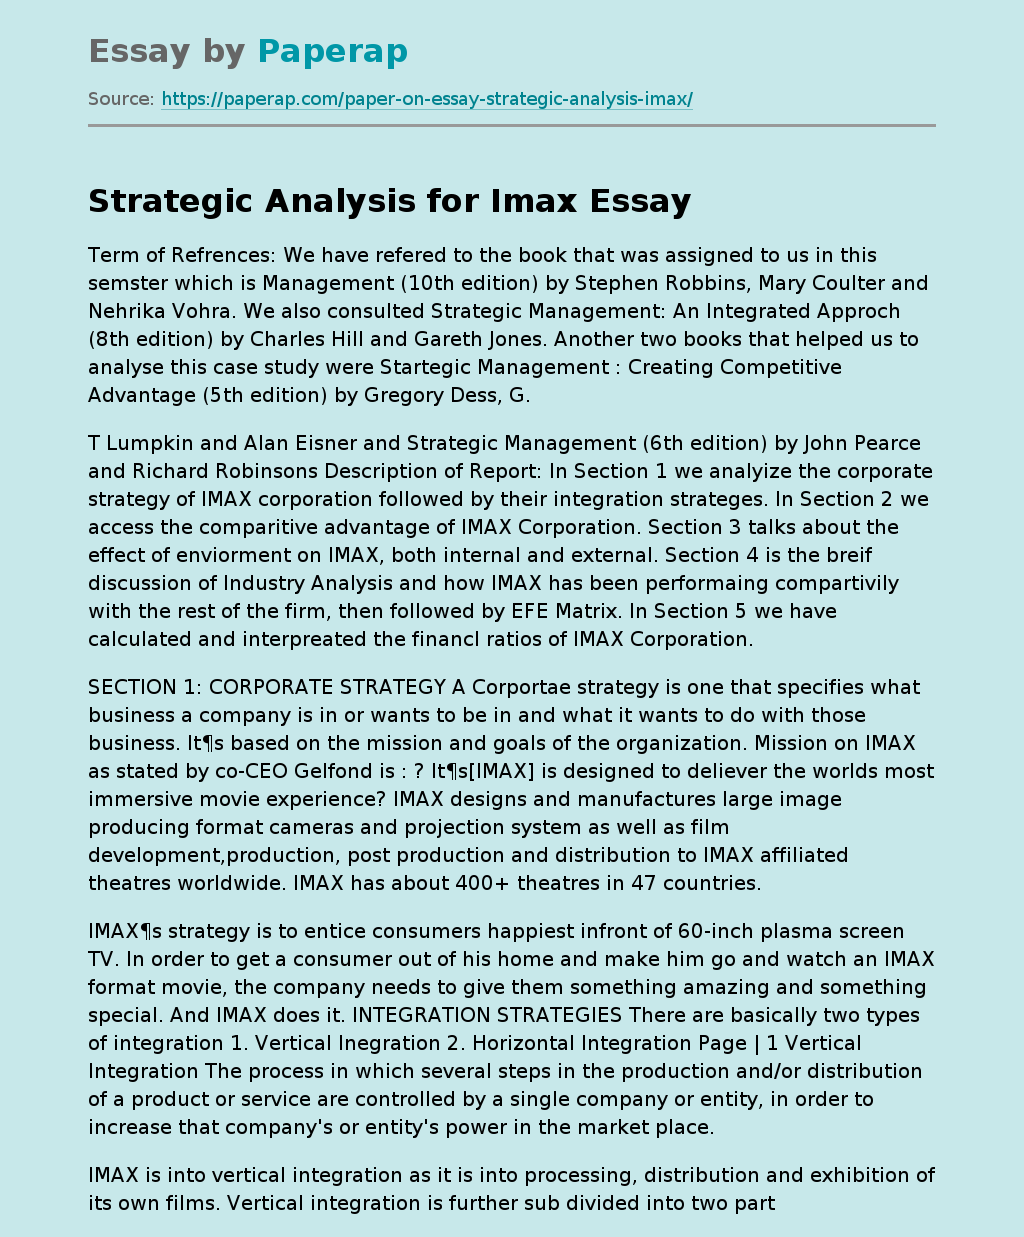 Strategic Analysis for Imax